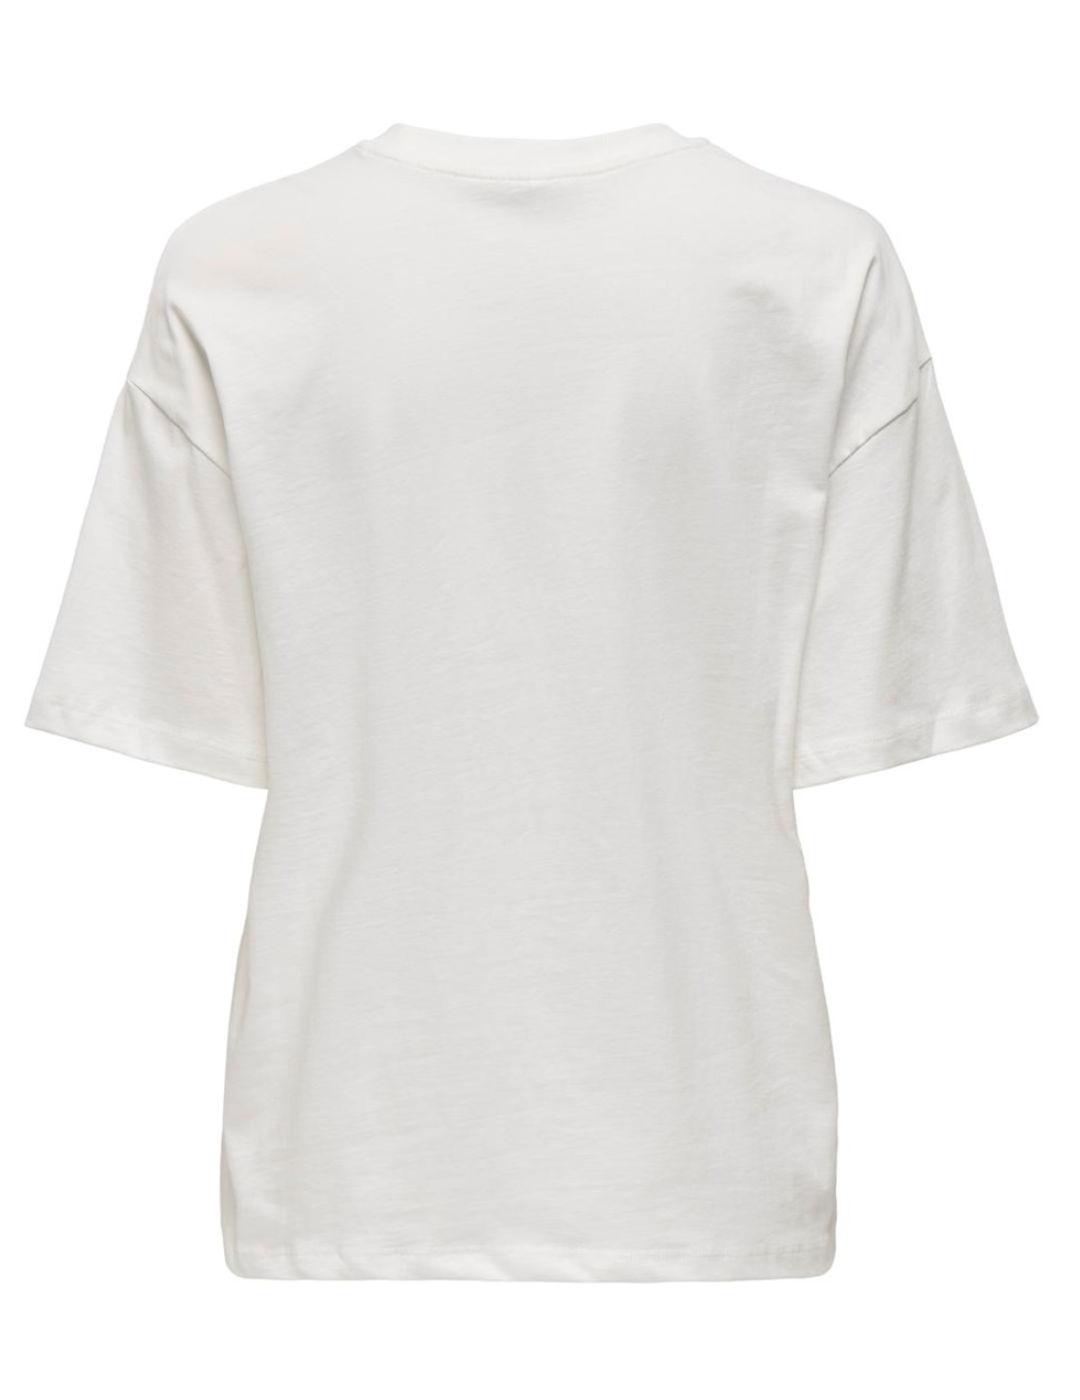 Camiseta Only Carly blanco Heartbrea manga corta para mujer